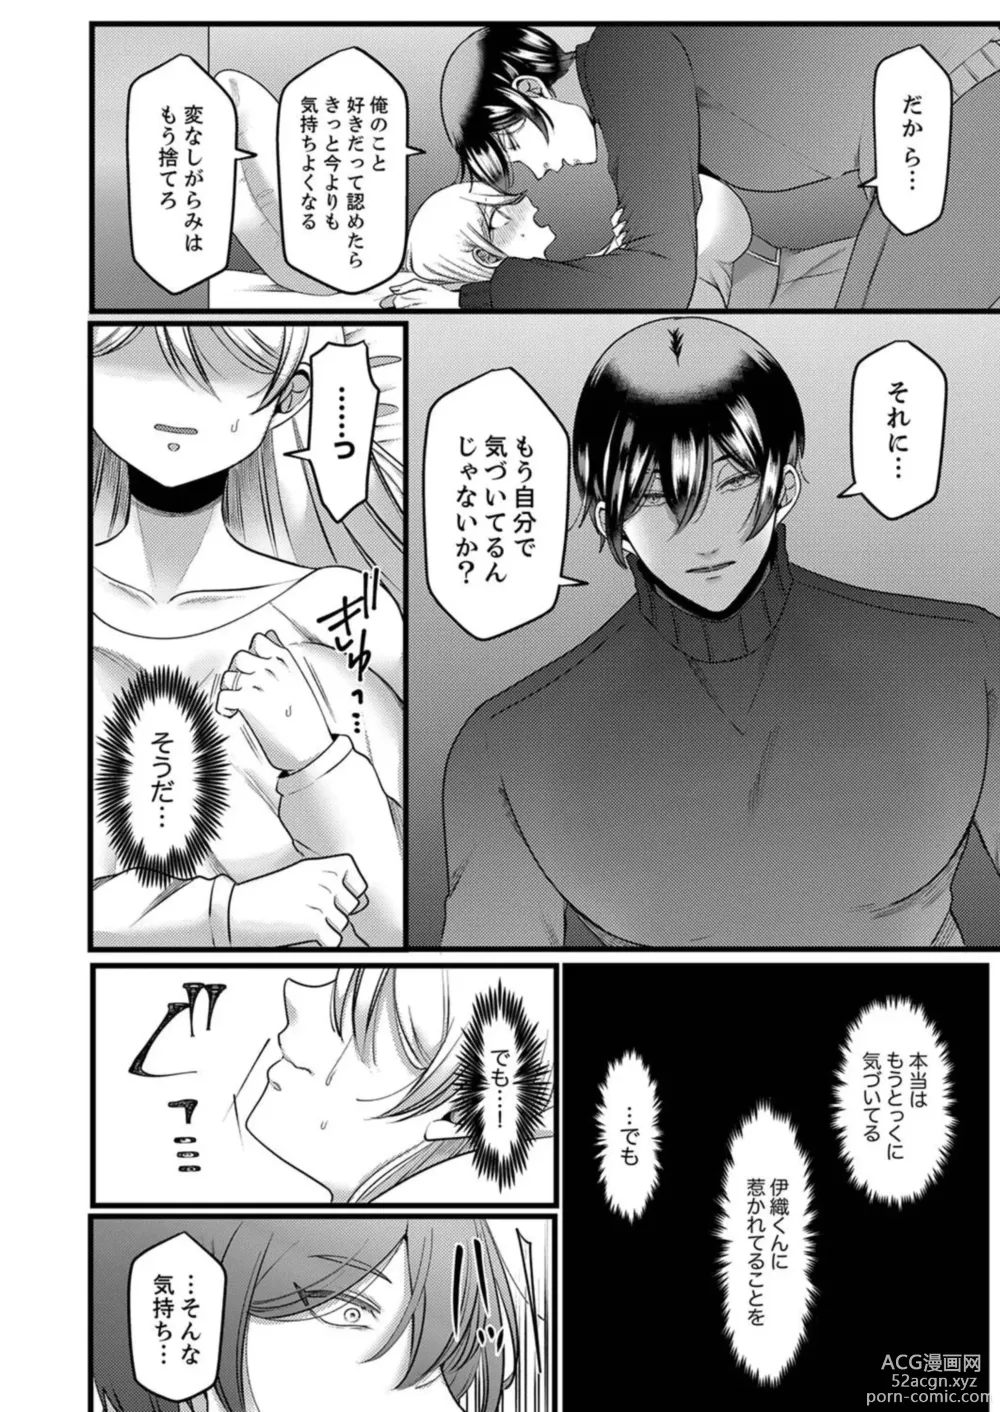 Page 149 of manga Kyohiken Nante Nain da Yo